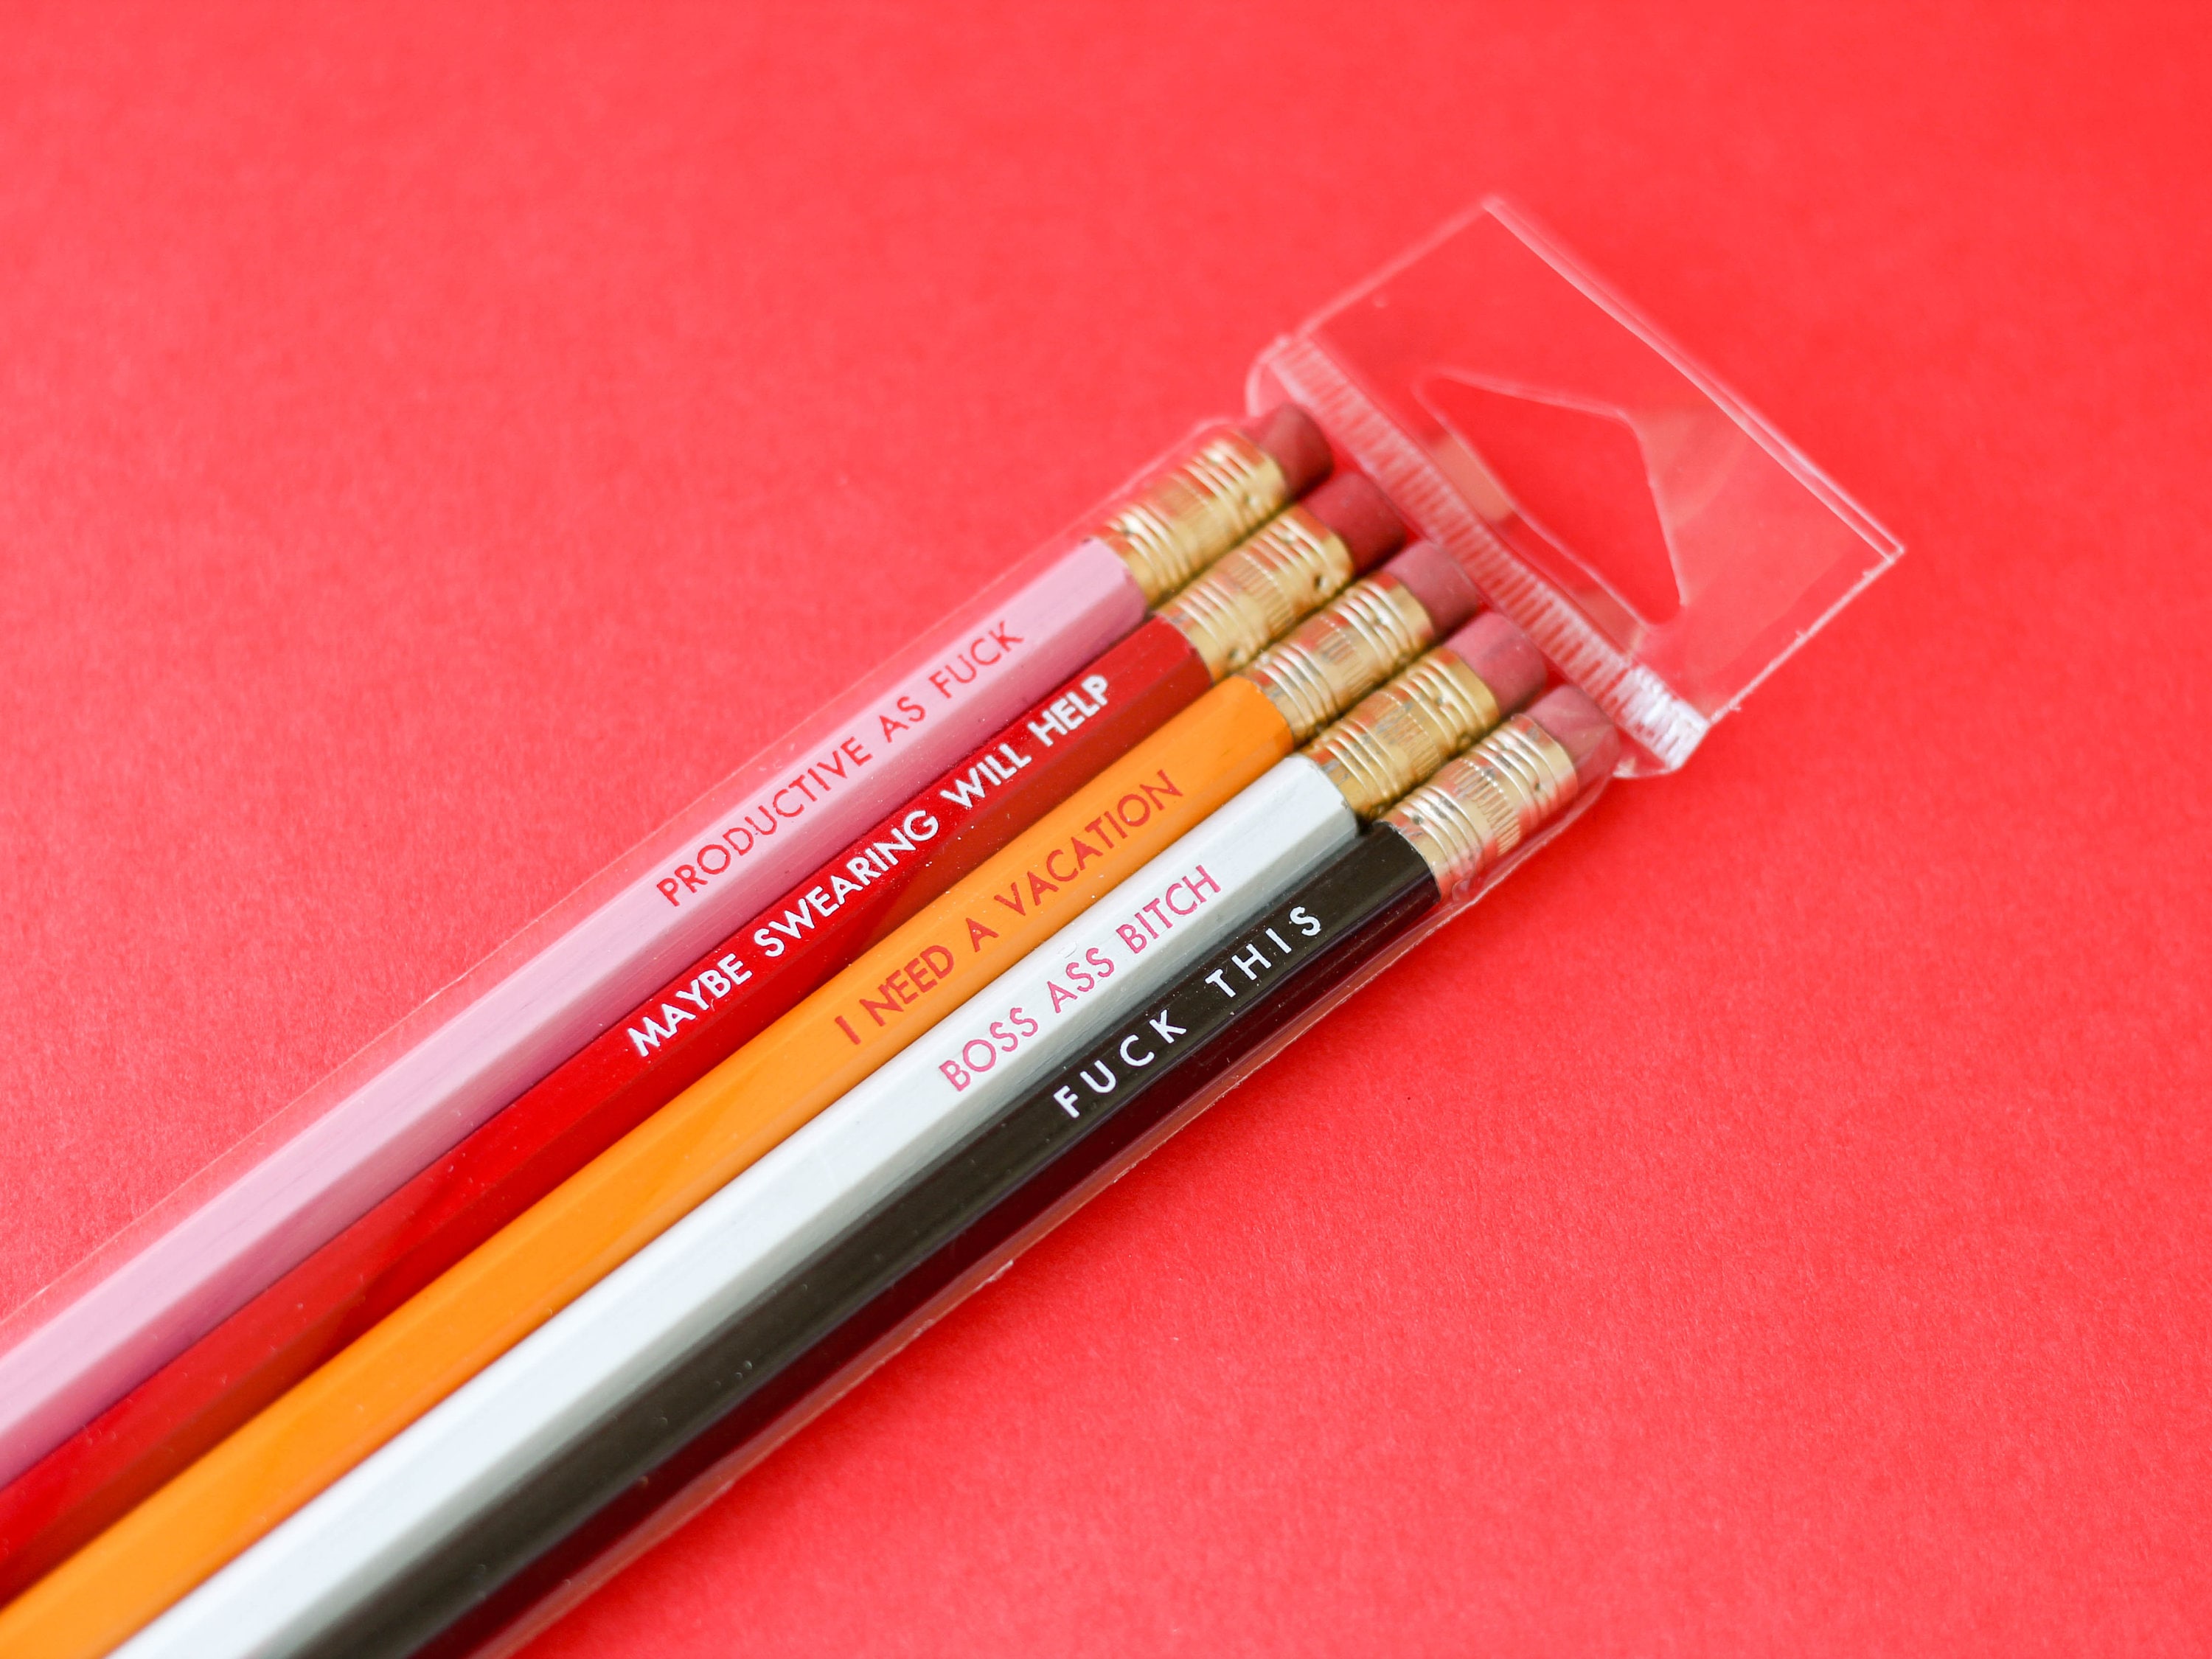 5PCS Offensive Pen MAMA Pen Creative Plastic Negative Pen Shit-show Pens  Stationery Funny Customer Service Pens School Supplies - AliExpress